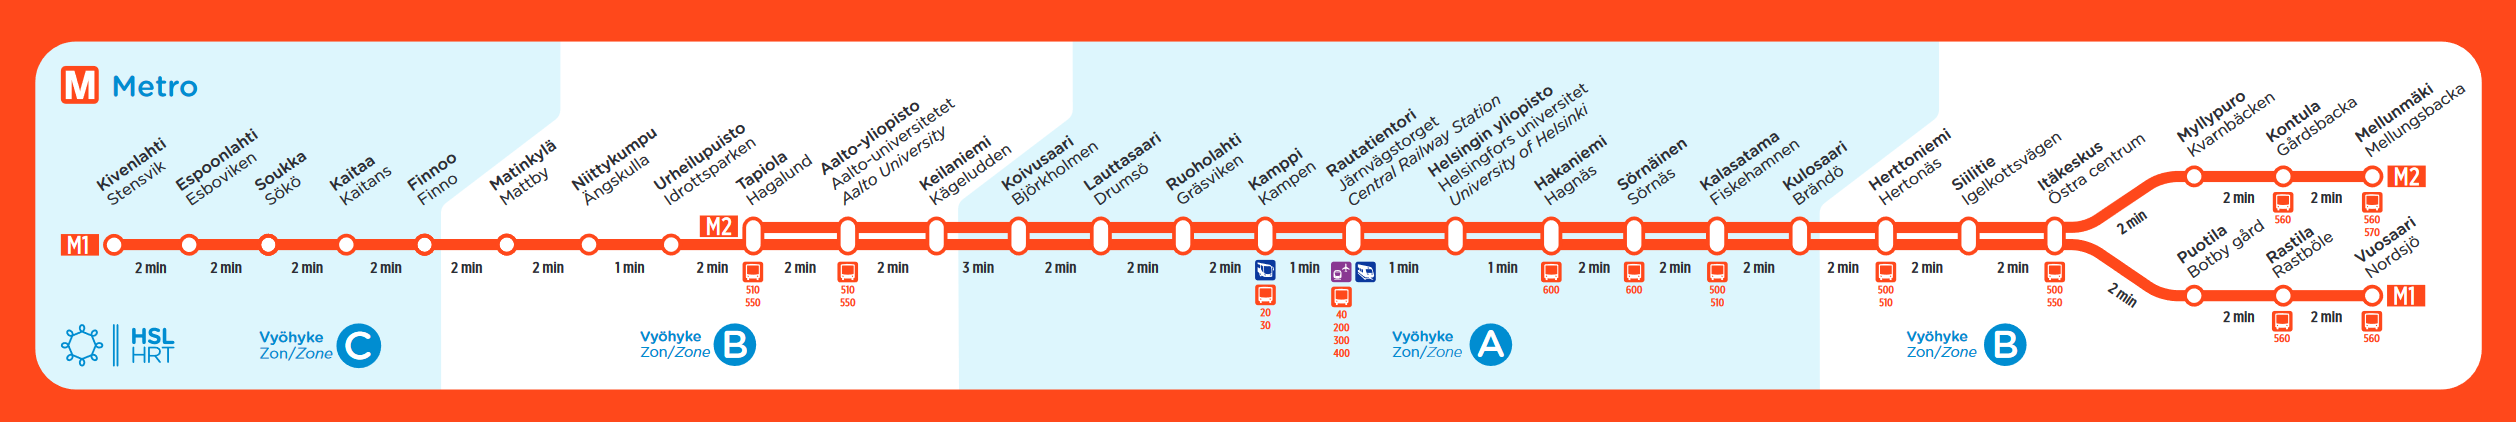 metroasemat helsinki kartta Helsingin metrokartta | Lomalista.fi